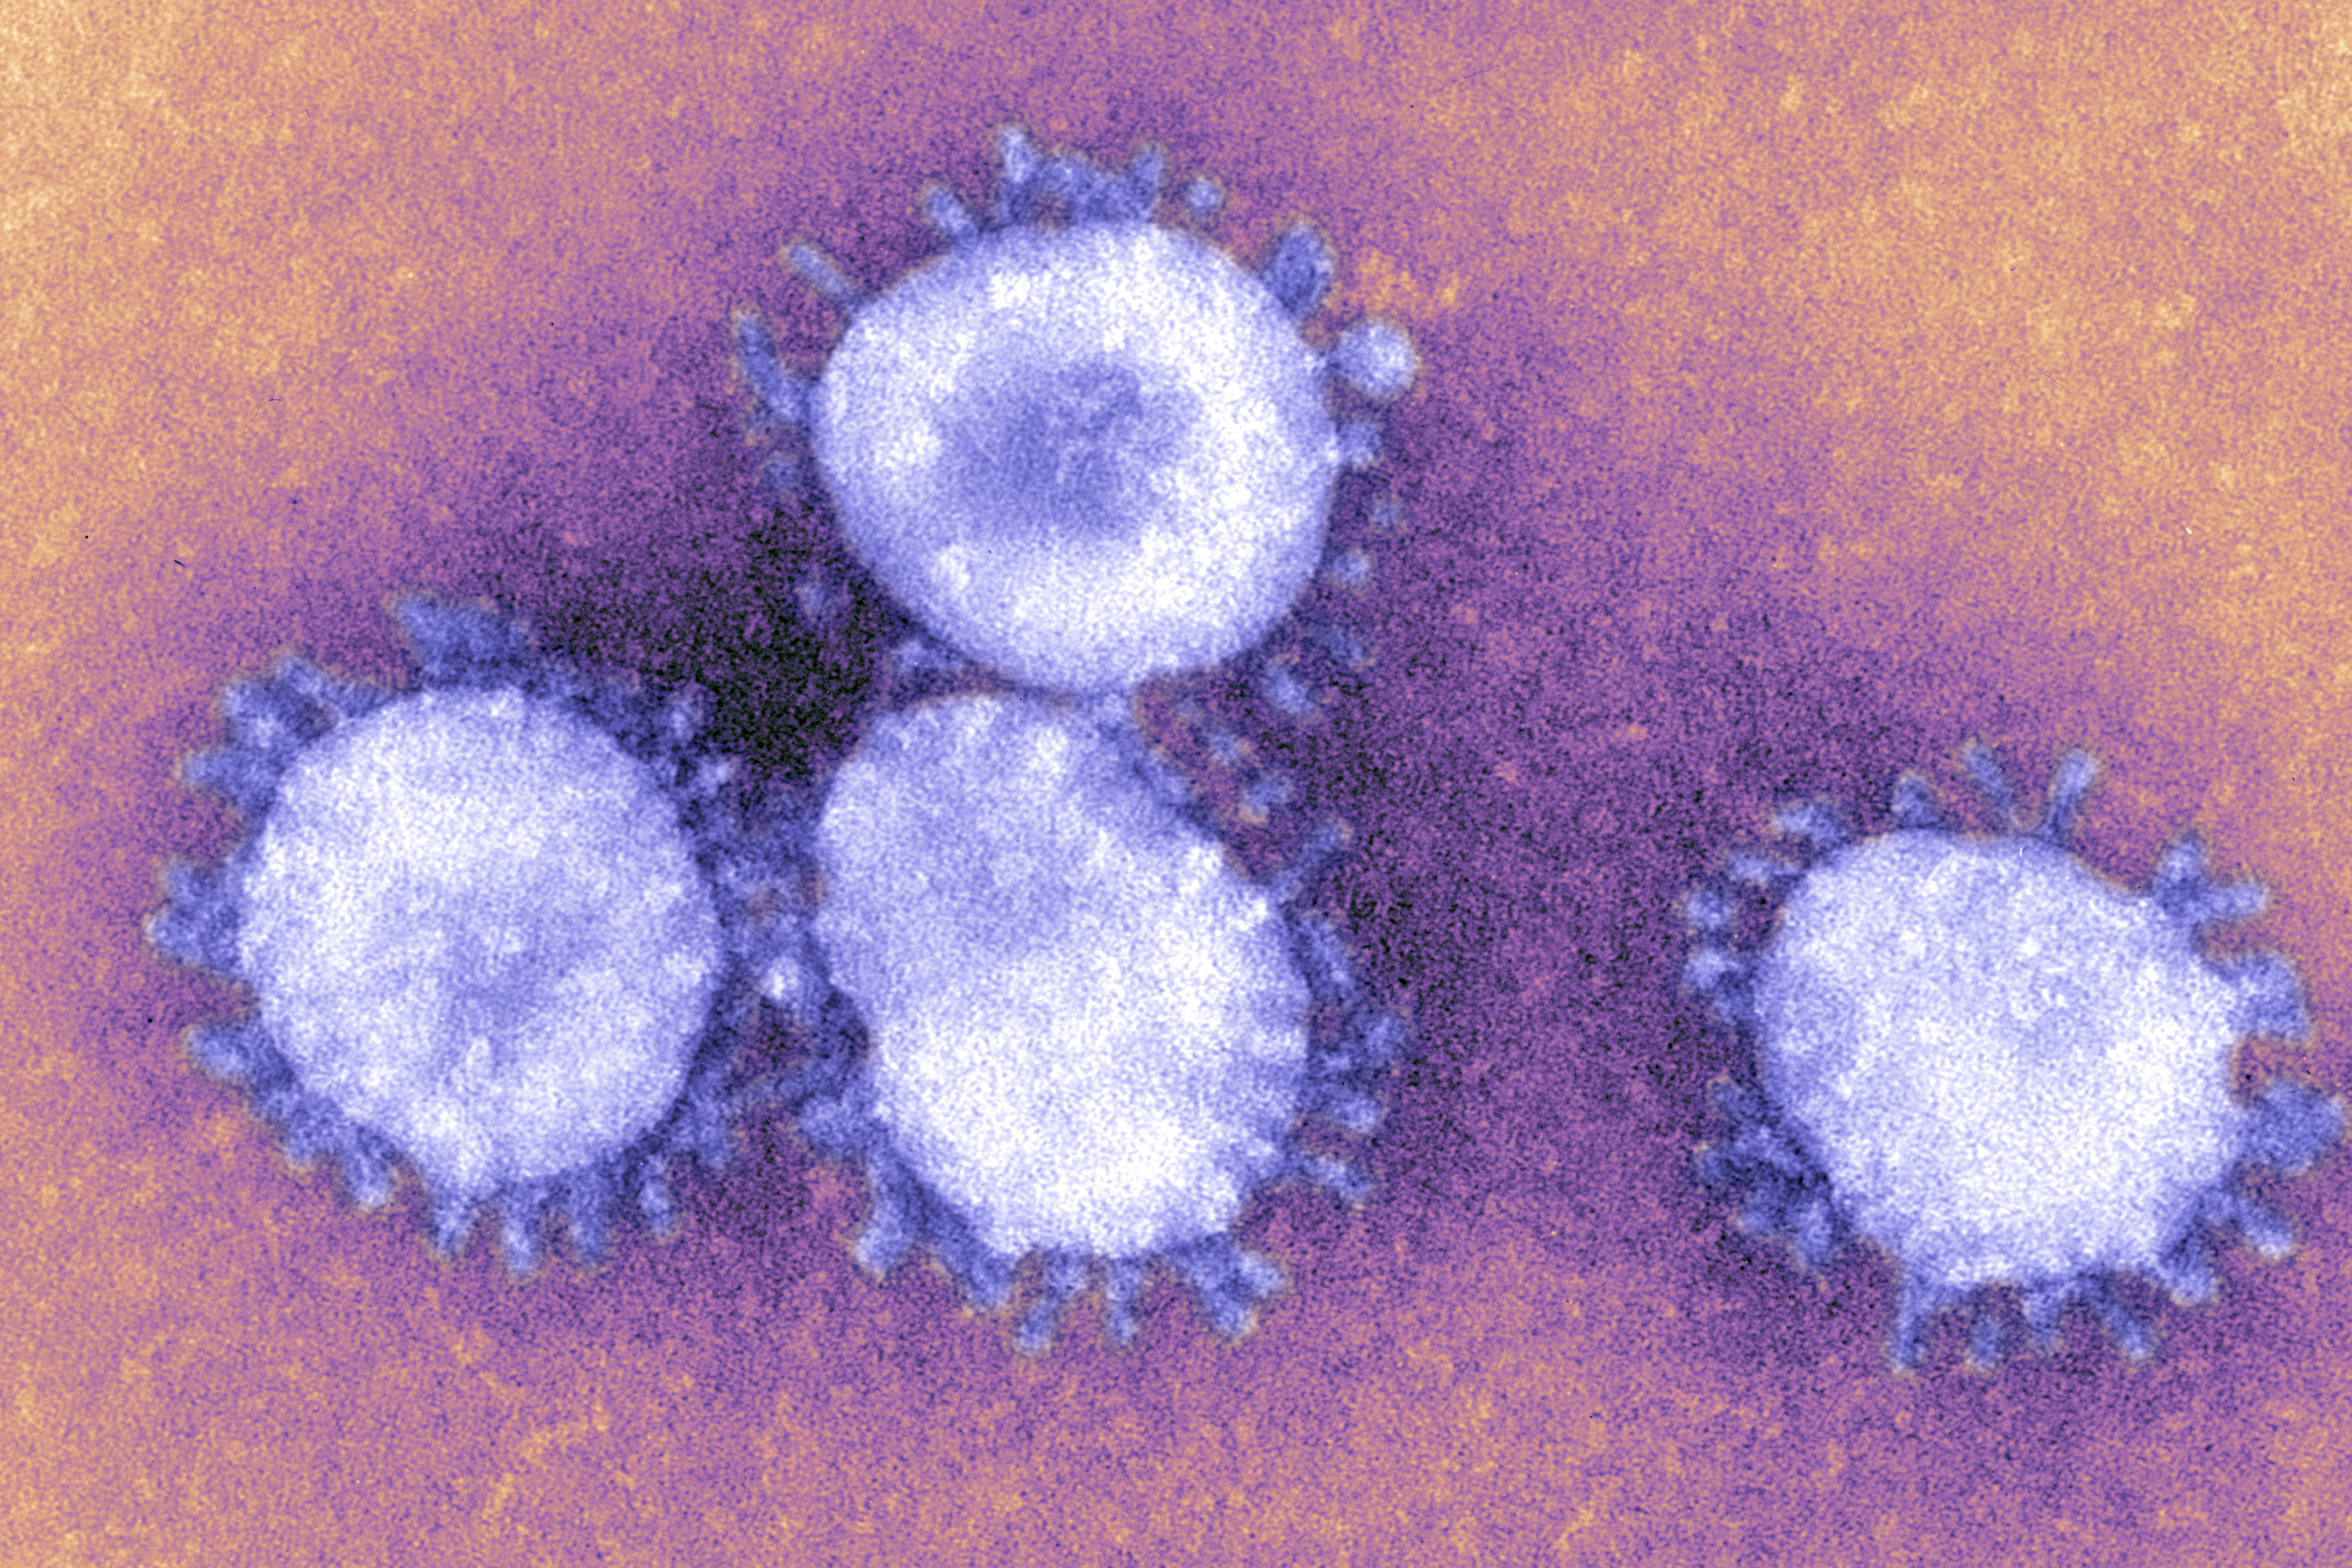 Коронавирус года появился. Вирус коронавирус под микроскопом. Коронавирус 2019 под микроскопом. Микрофотография вируса коронавирус. Коронавирус в микроскопе.